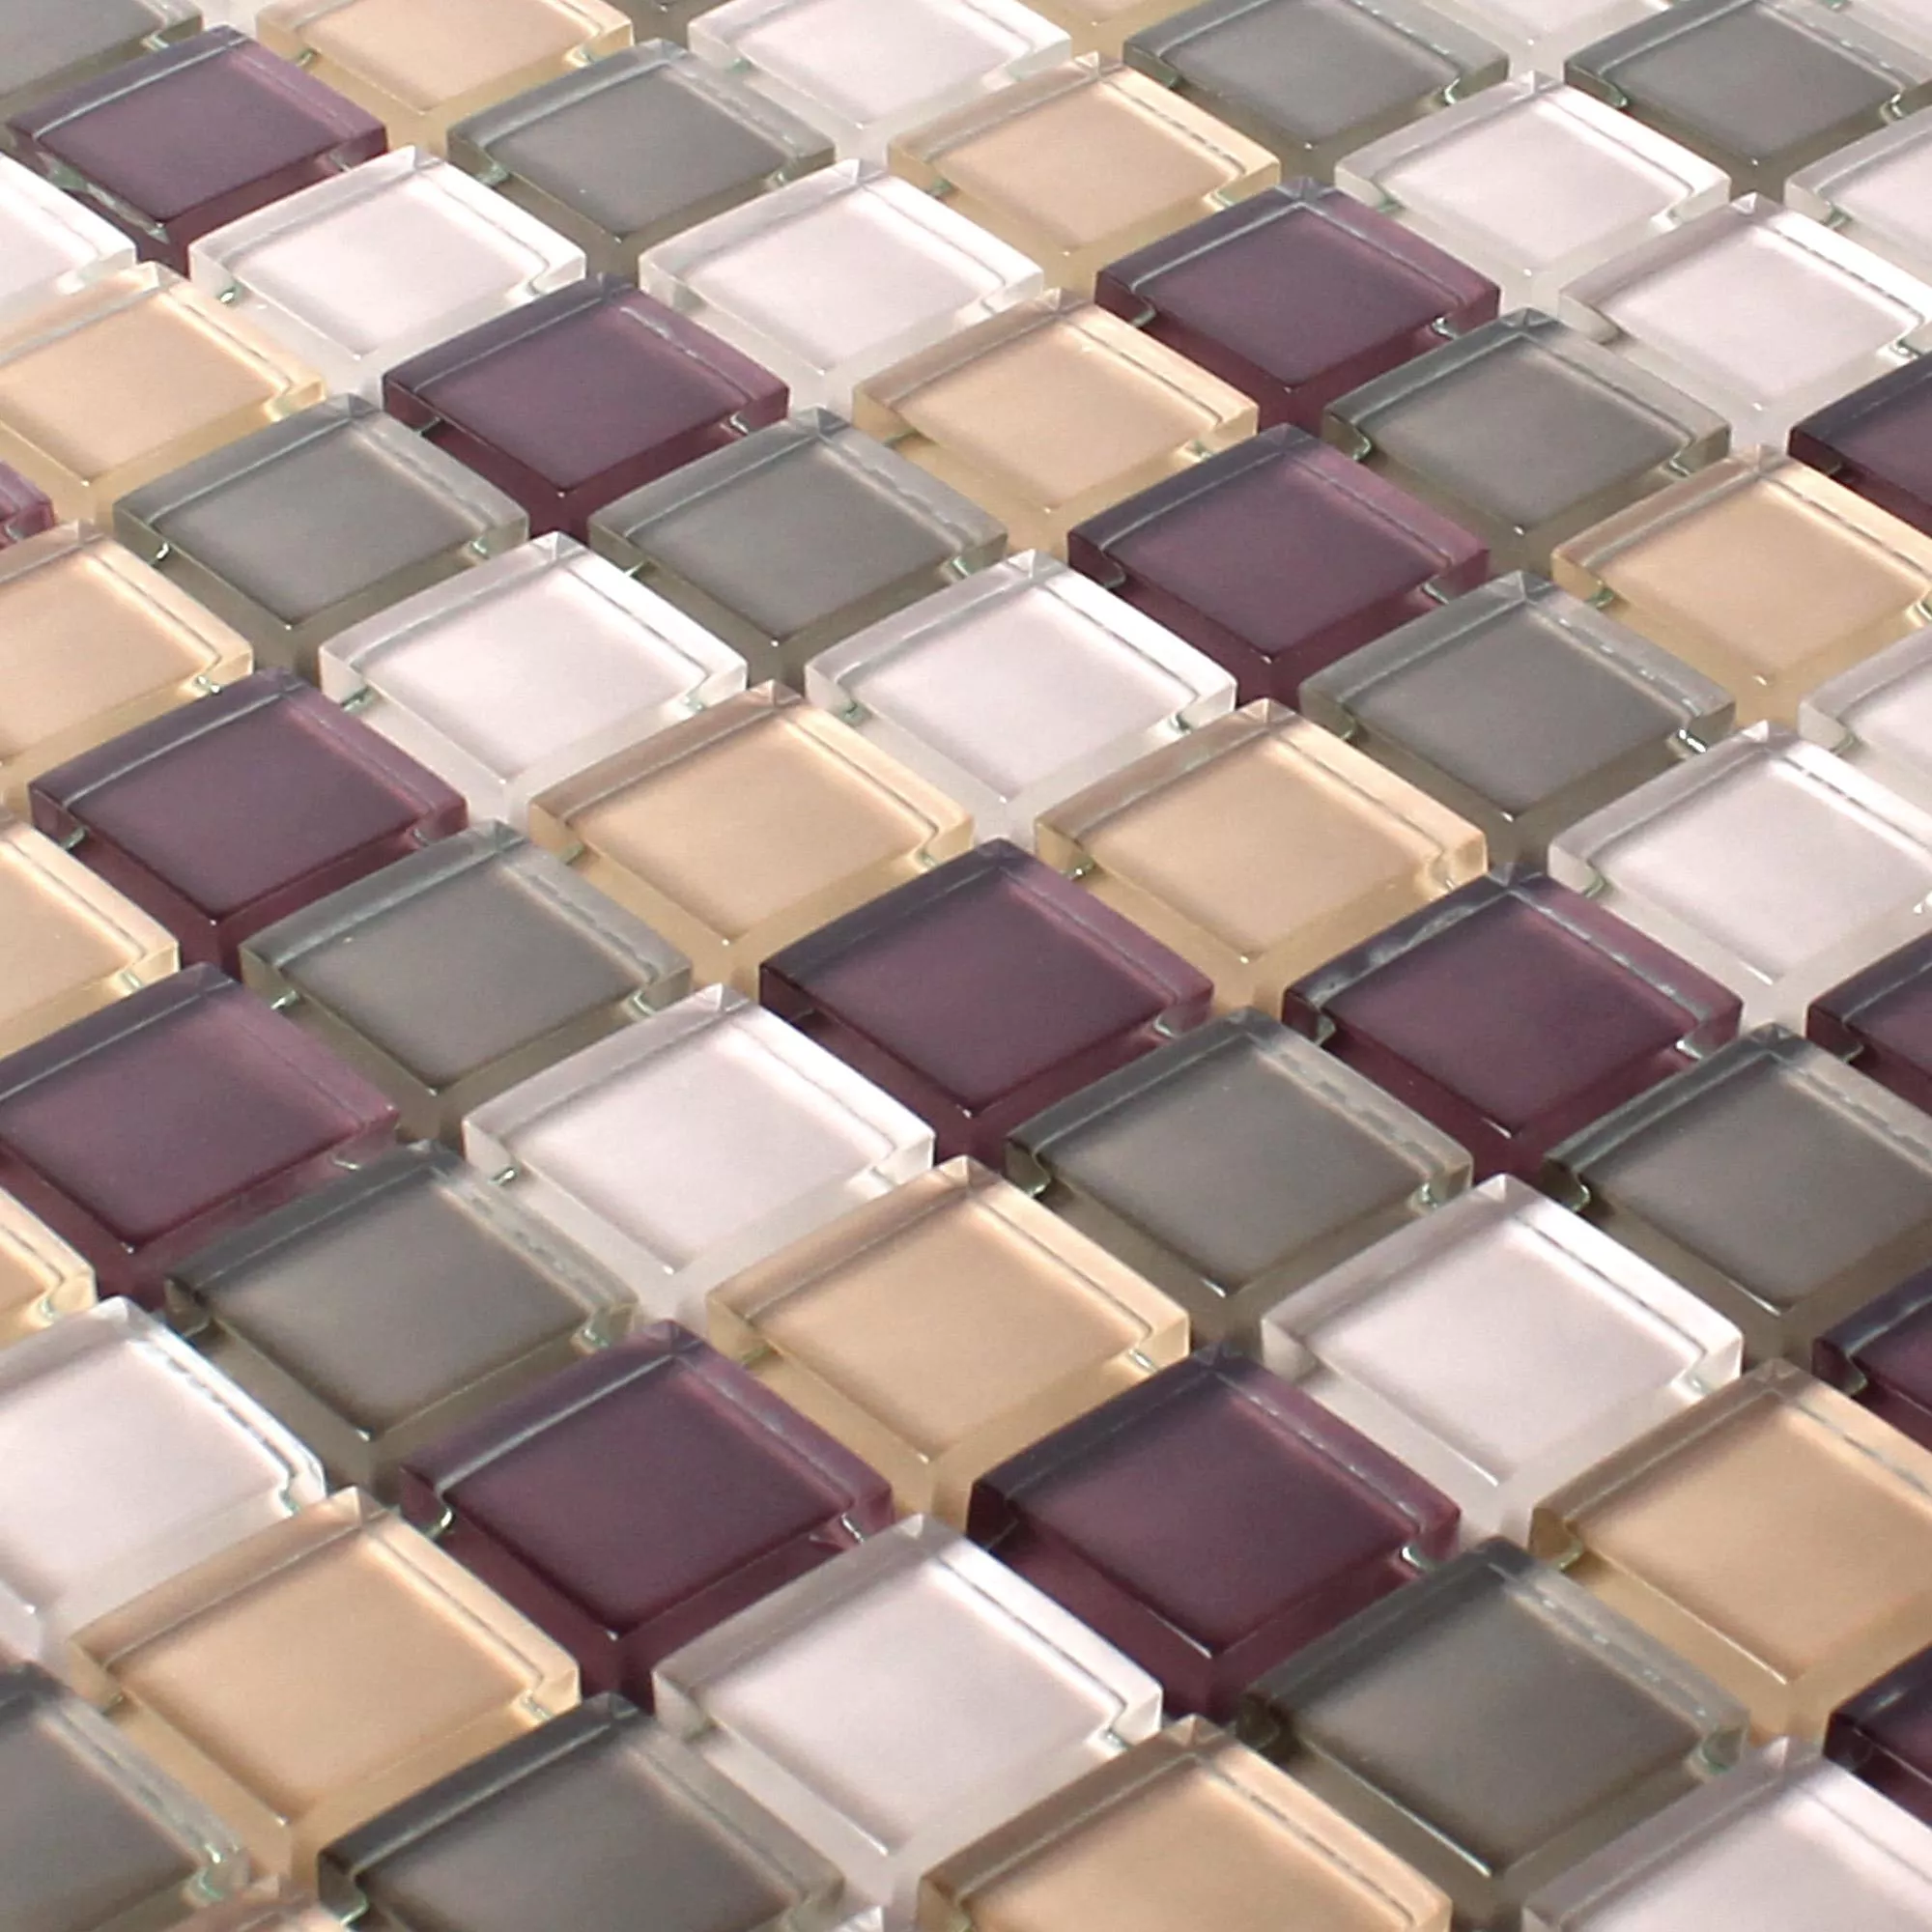 Sample Glass Mosaic Tiles Benjamin Violet Beige